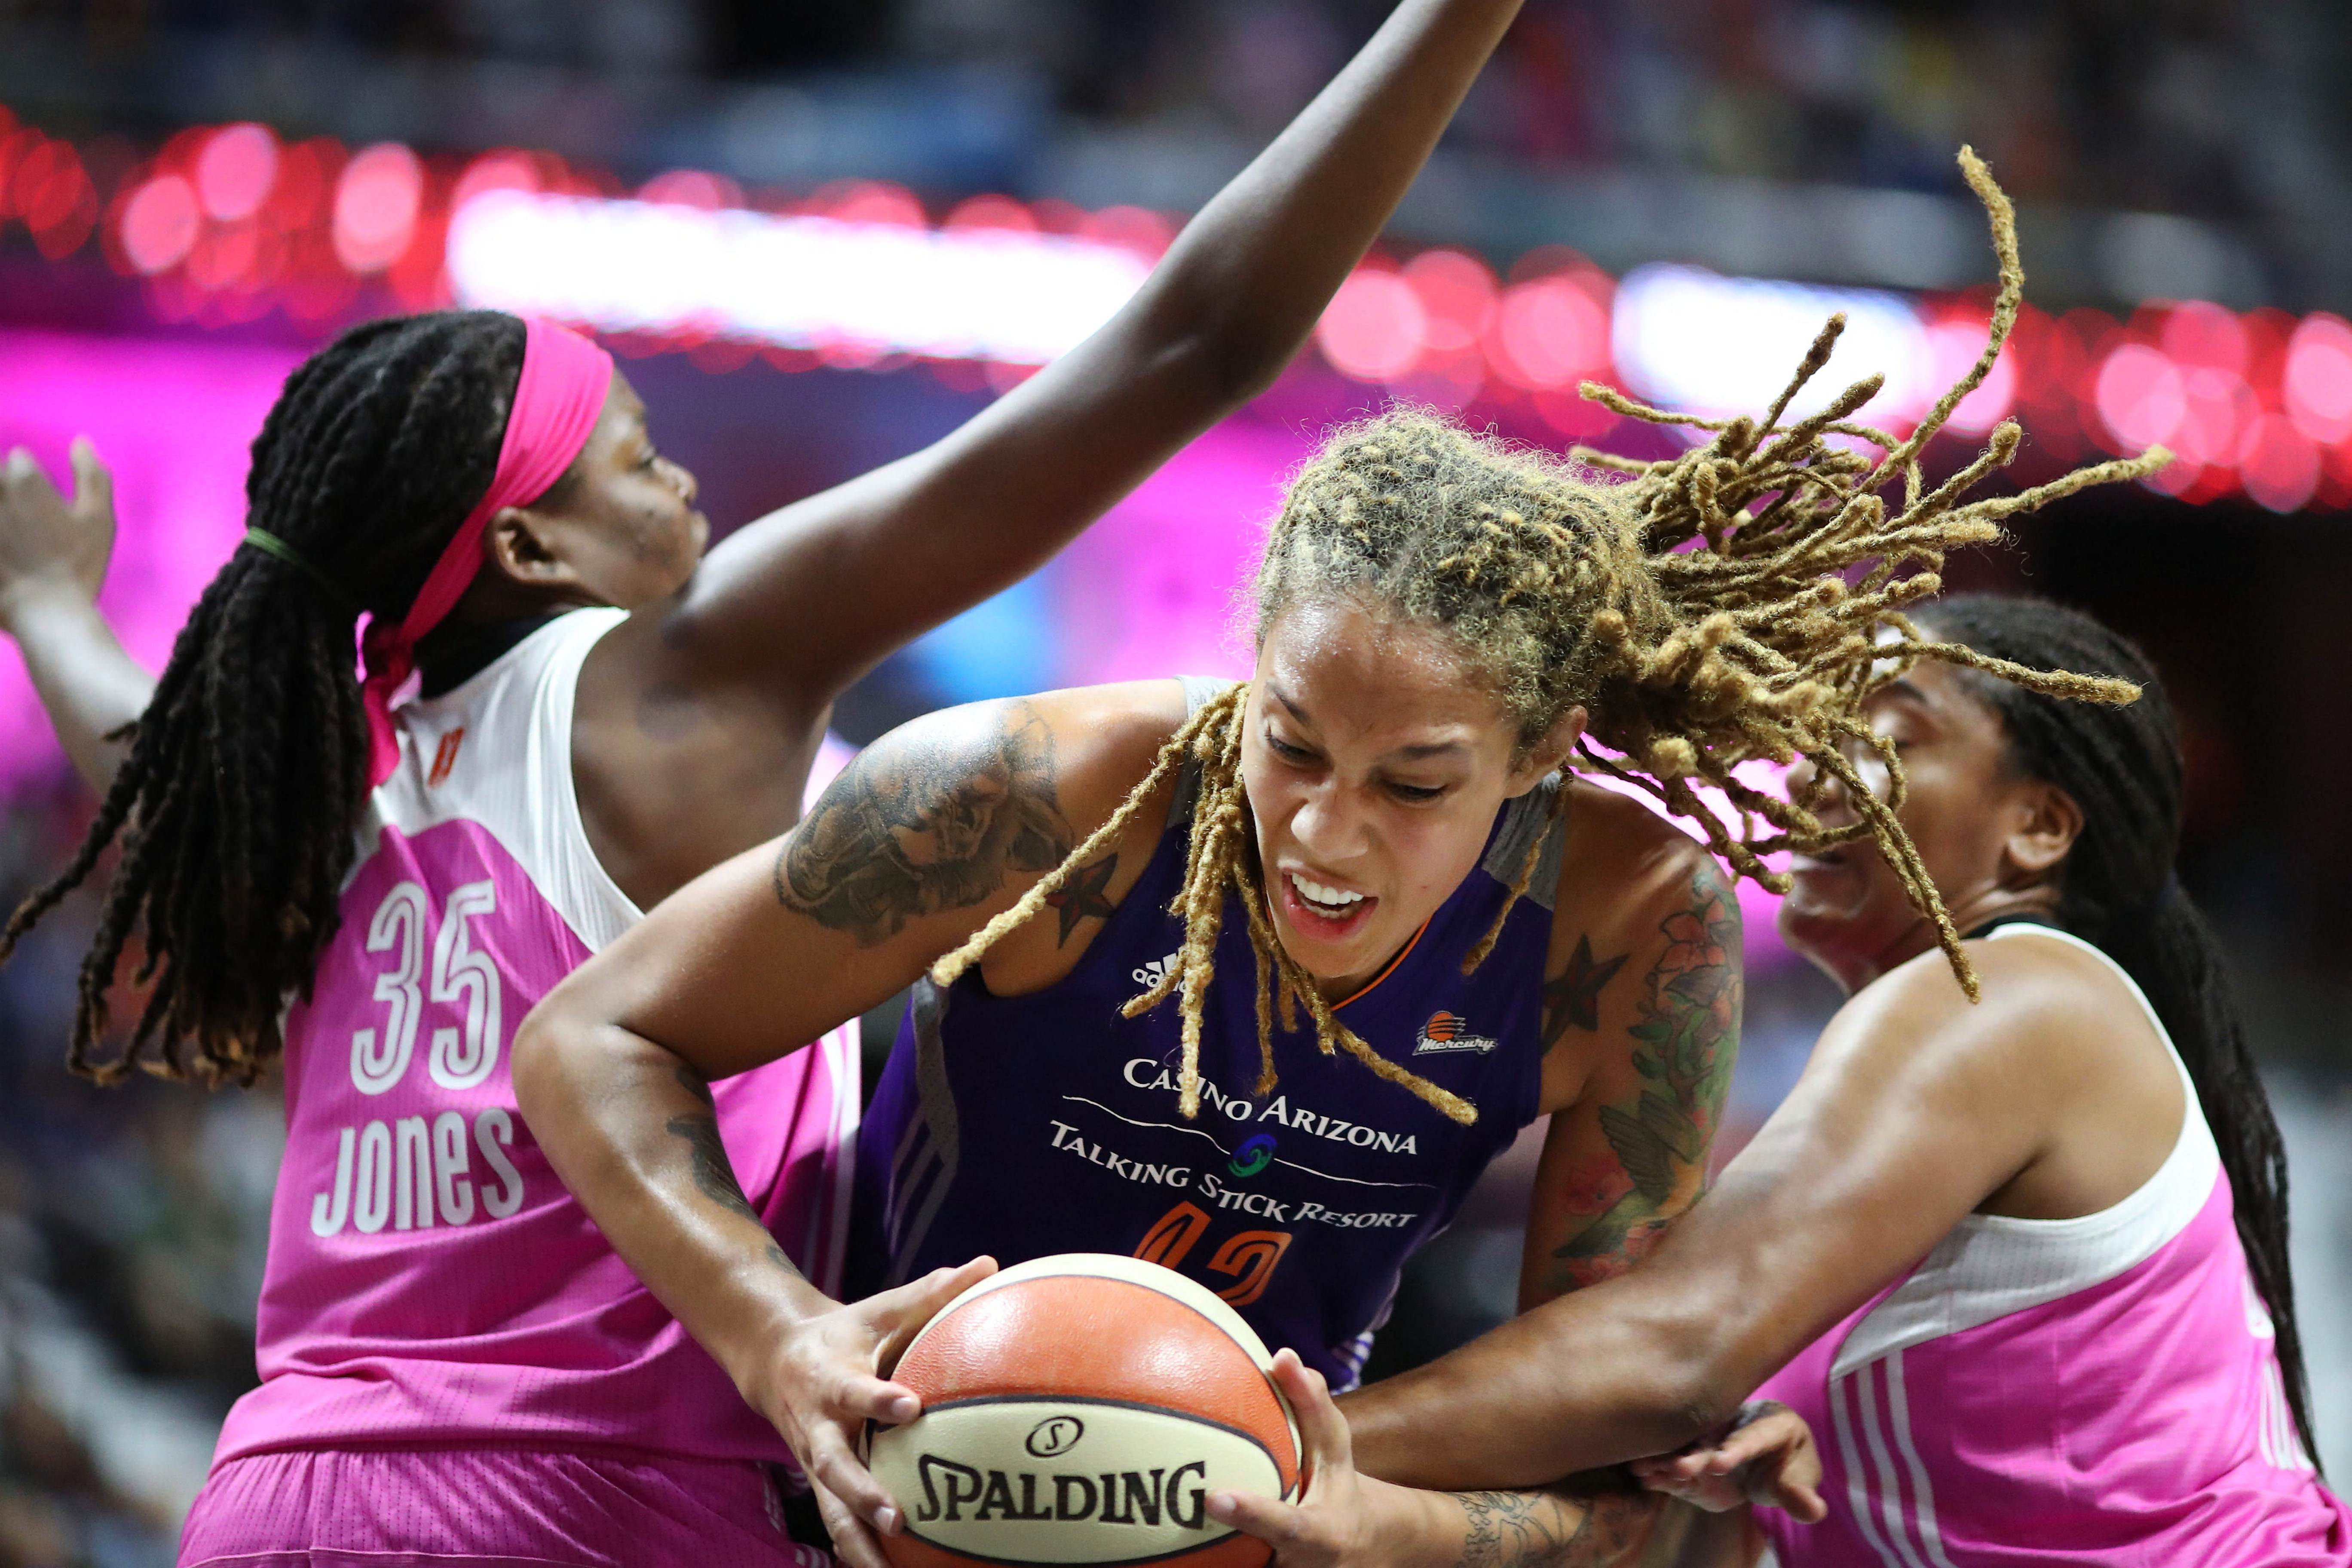 Sparks vs. Mercury final score, results: Brittney Griner's WNBA